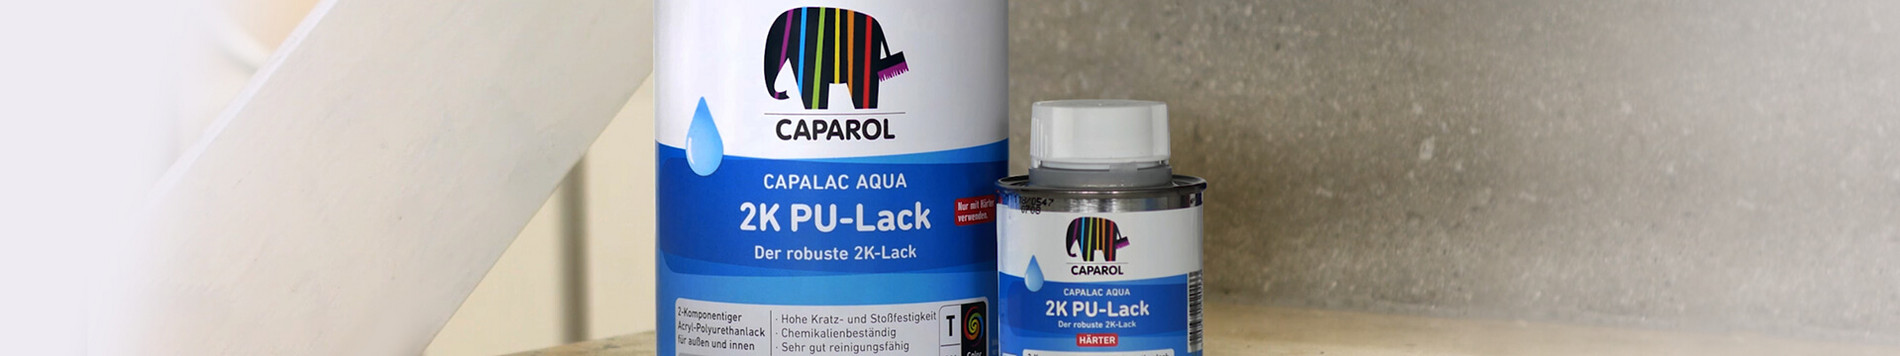 Capalac Aqua 2K PU-Lack